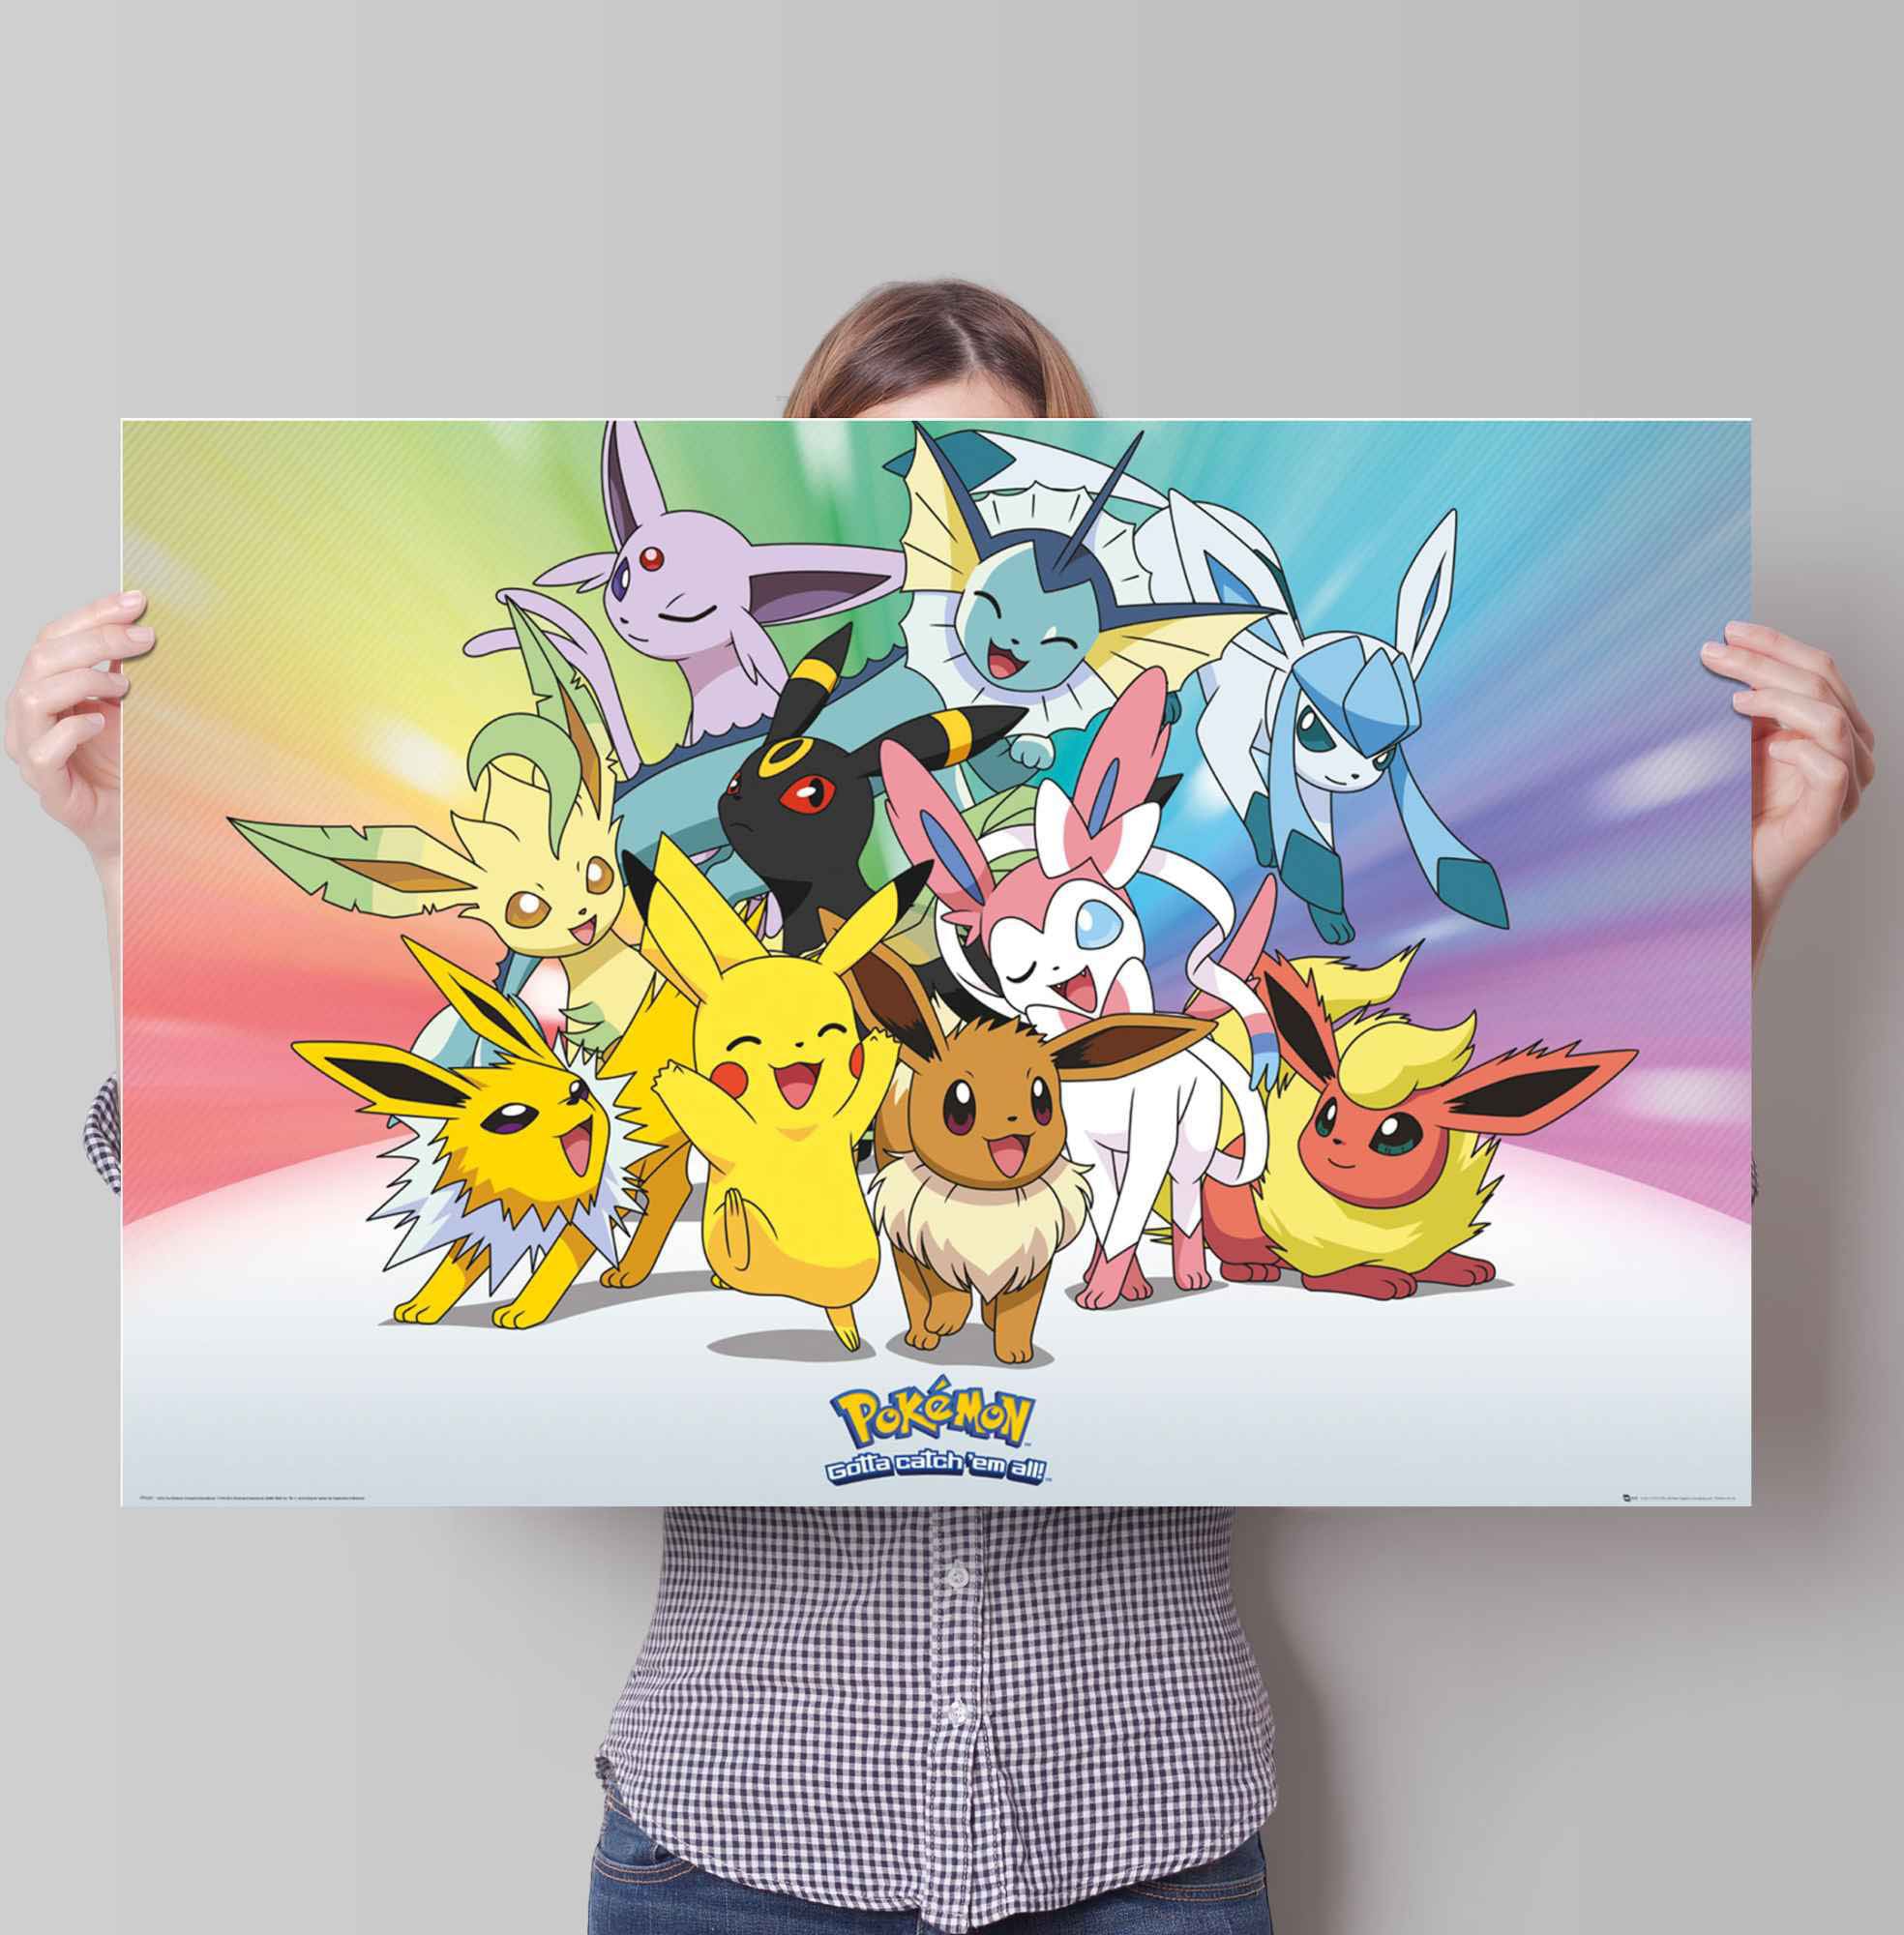 (1 Poster »Poster Raten Reinders! auf Comic, bestellen Pokemon«, St.)